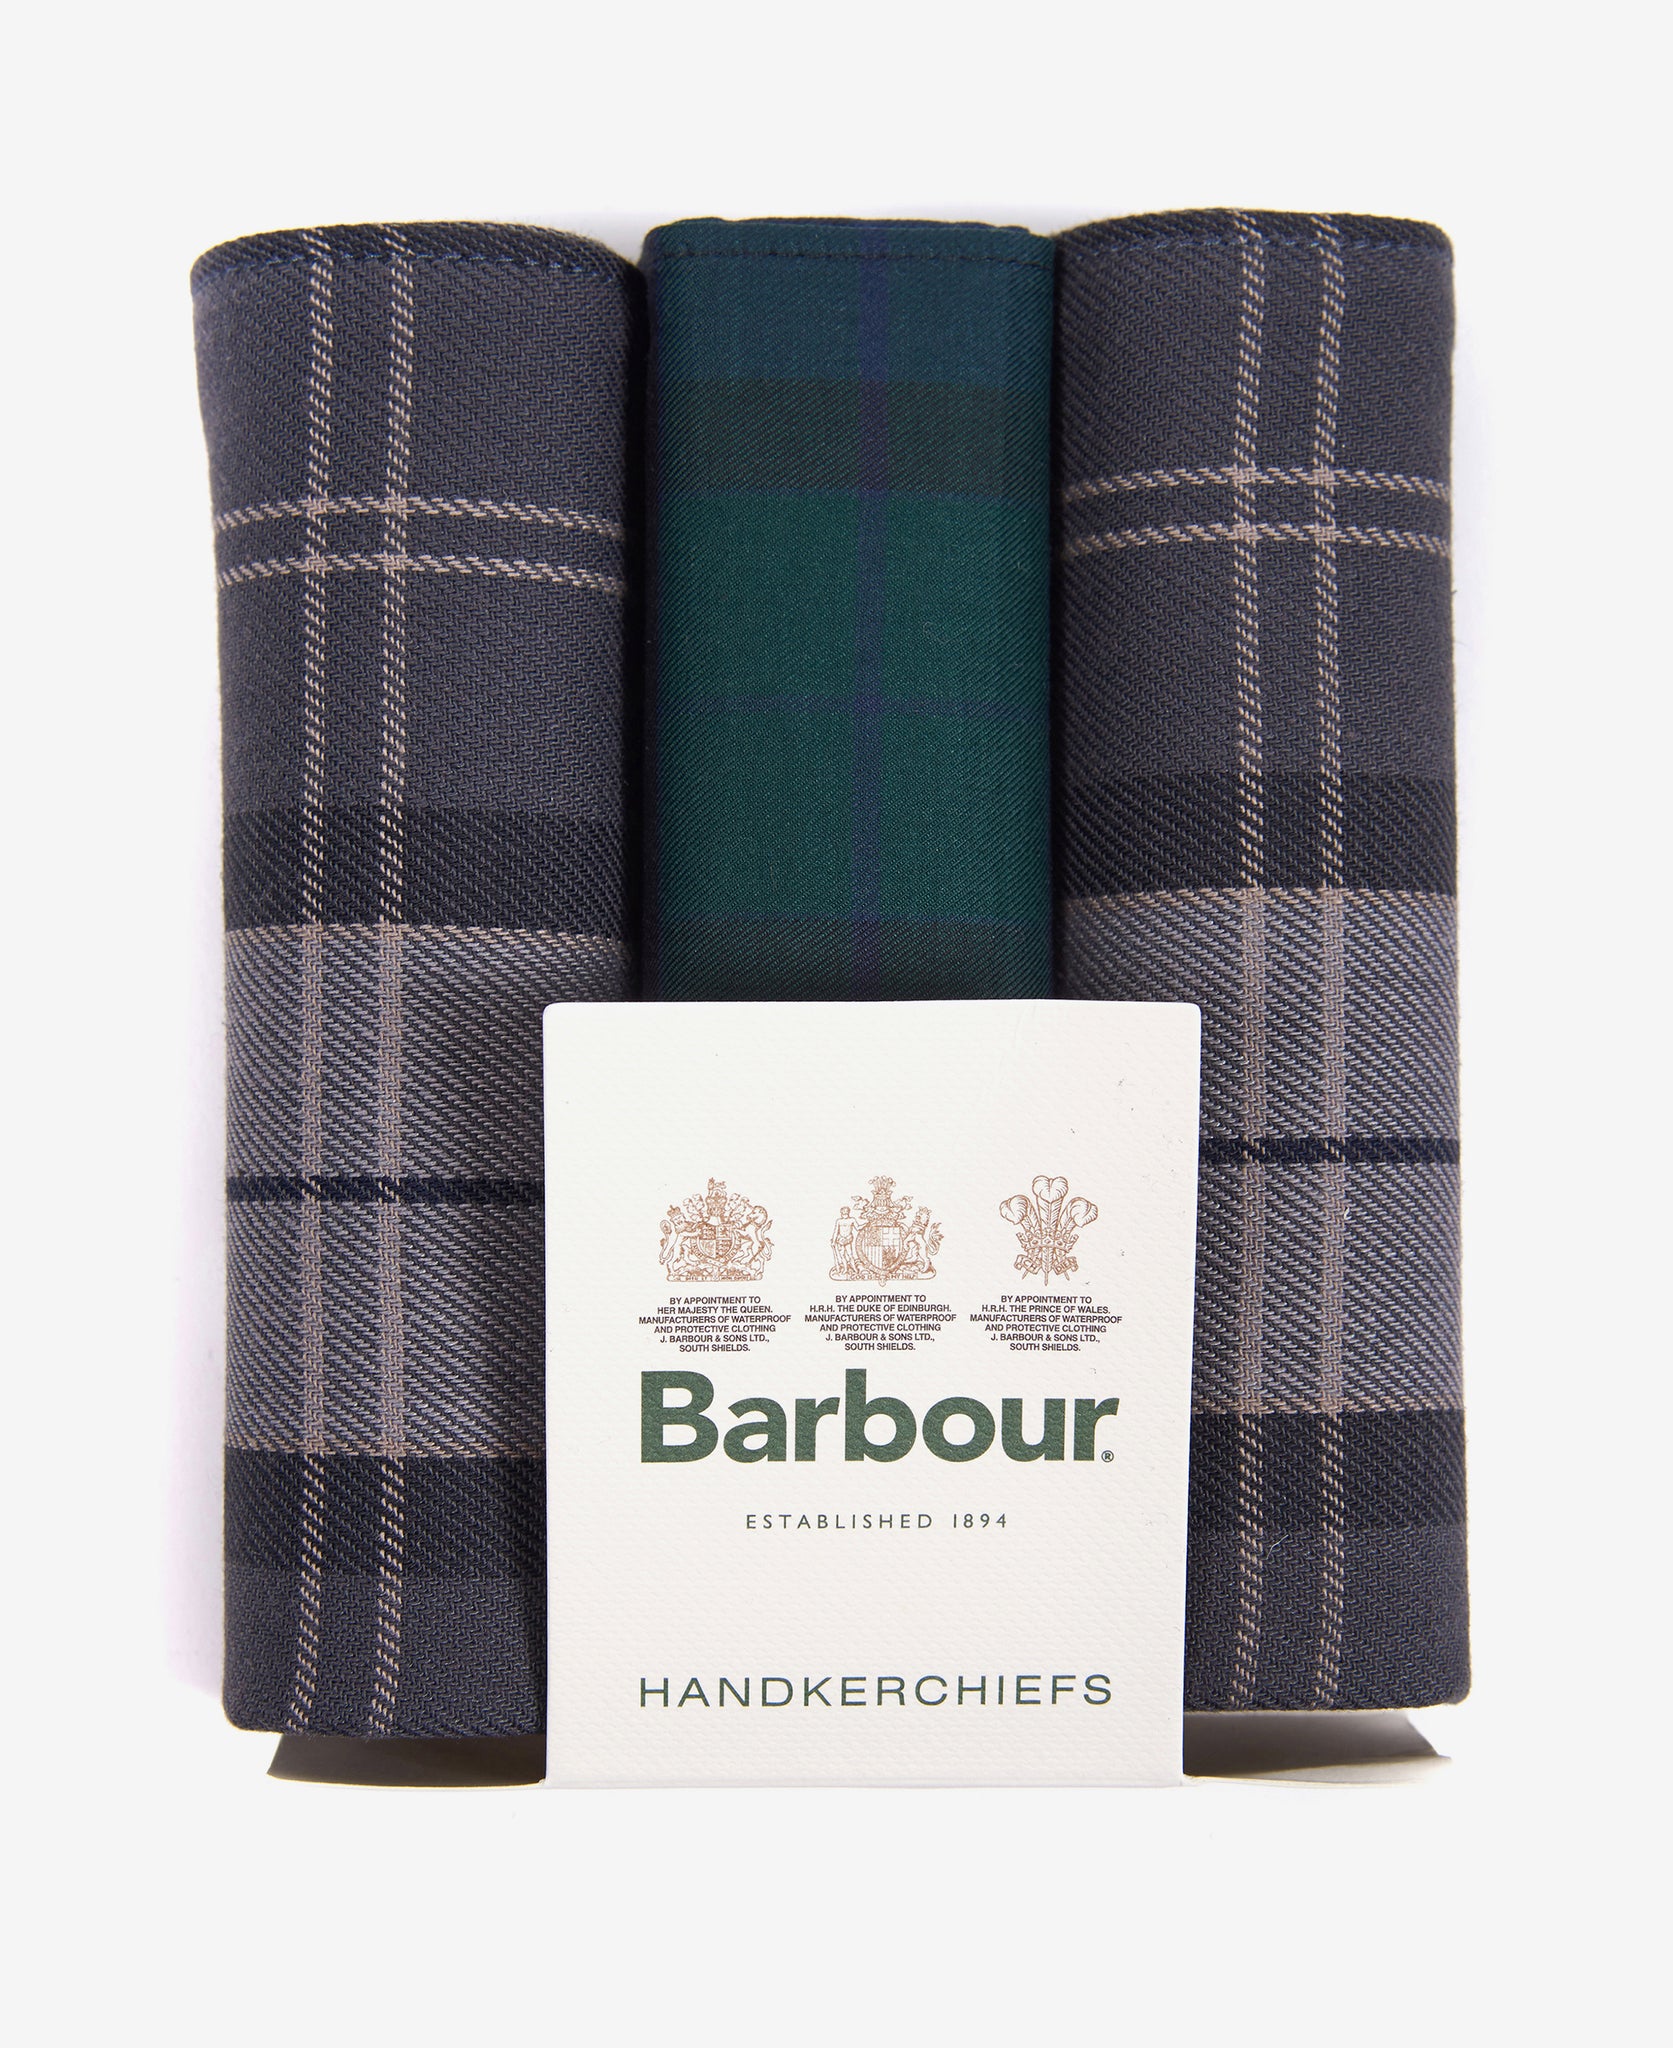 Barbour Handkerchiefs 3 Pack | Barbour Hankies – Sam Turner & Sons